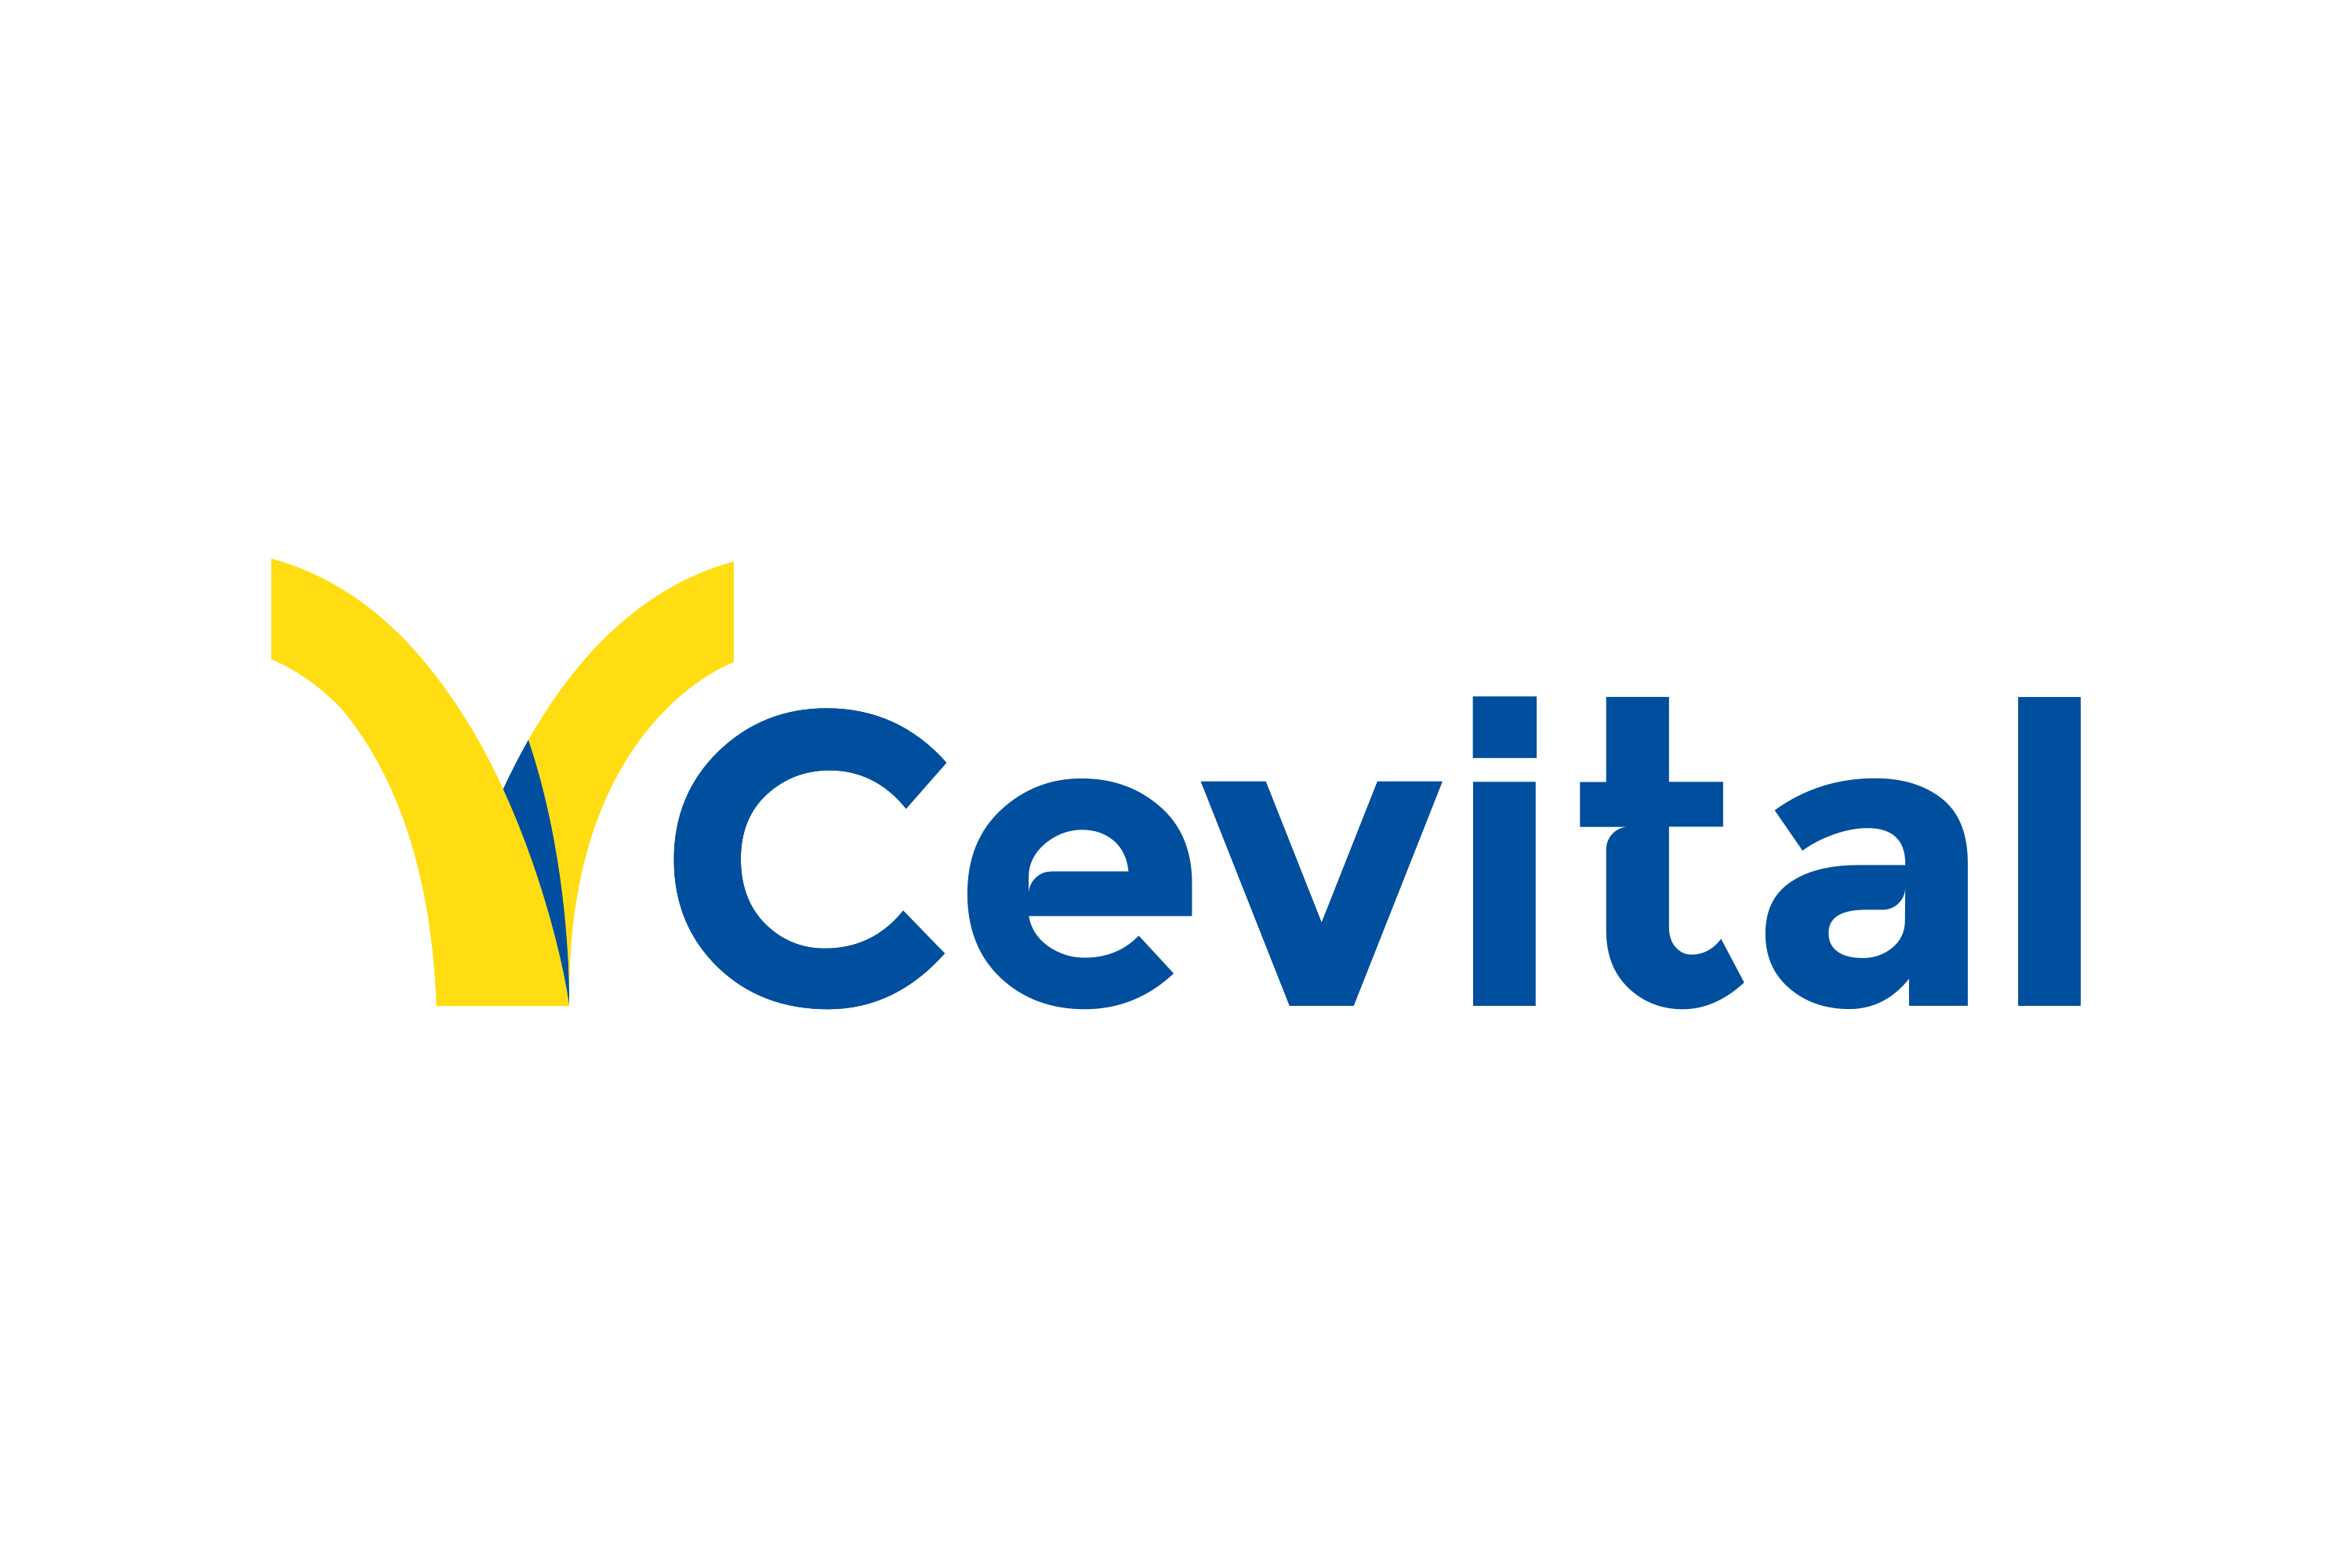 Cevital Logo